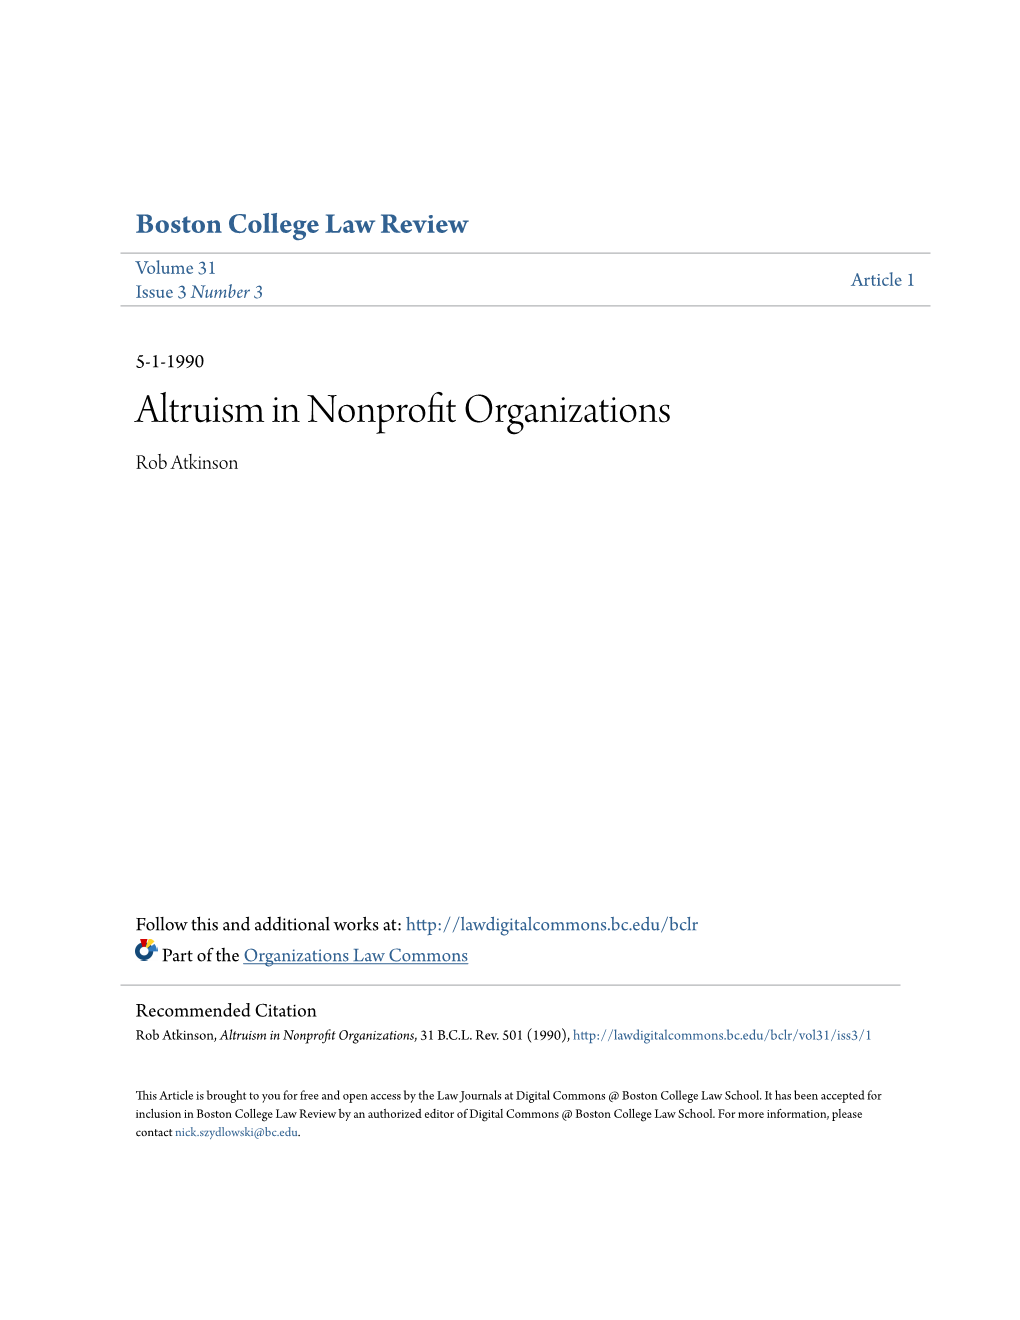 Altruism in Nonprofit Organizations Rob Atkinson